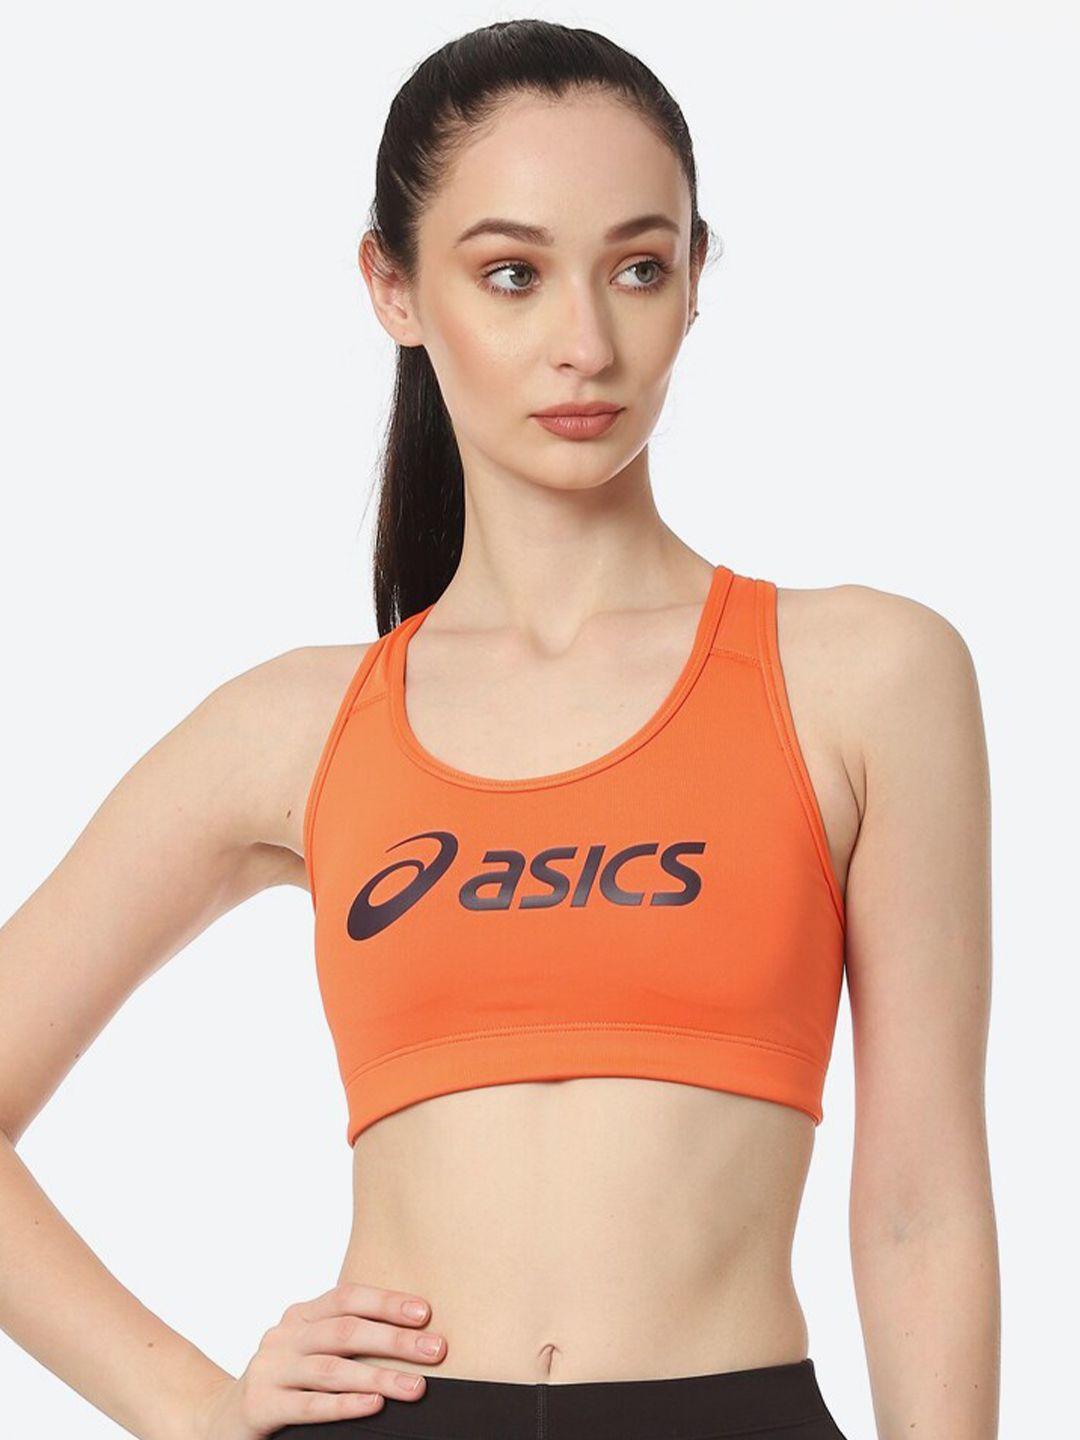 asics-women-orange-&-black-bra-lightly-padded-sports-bra